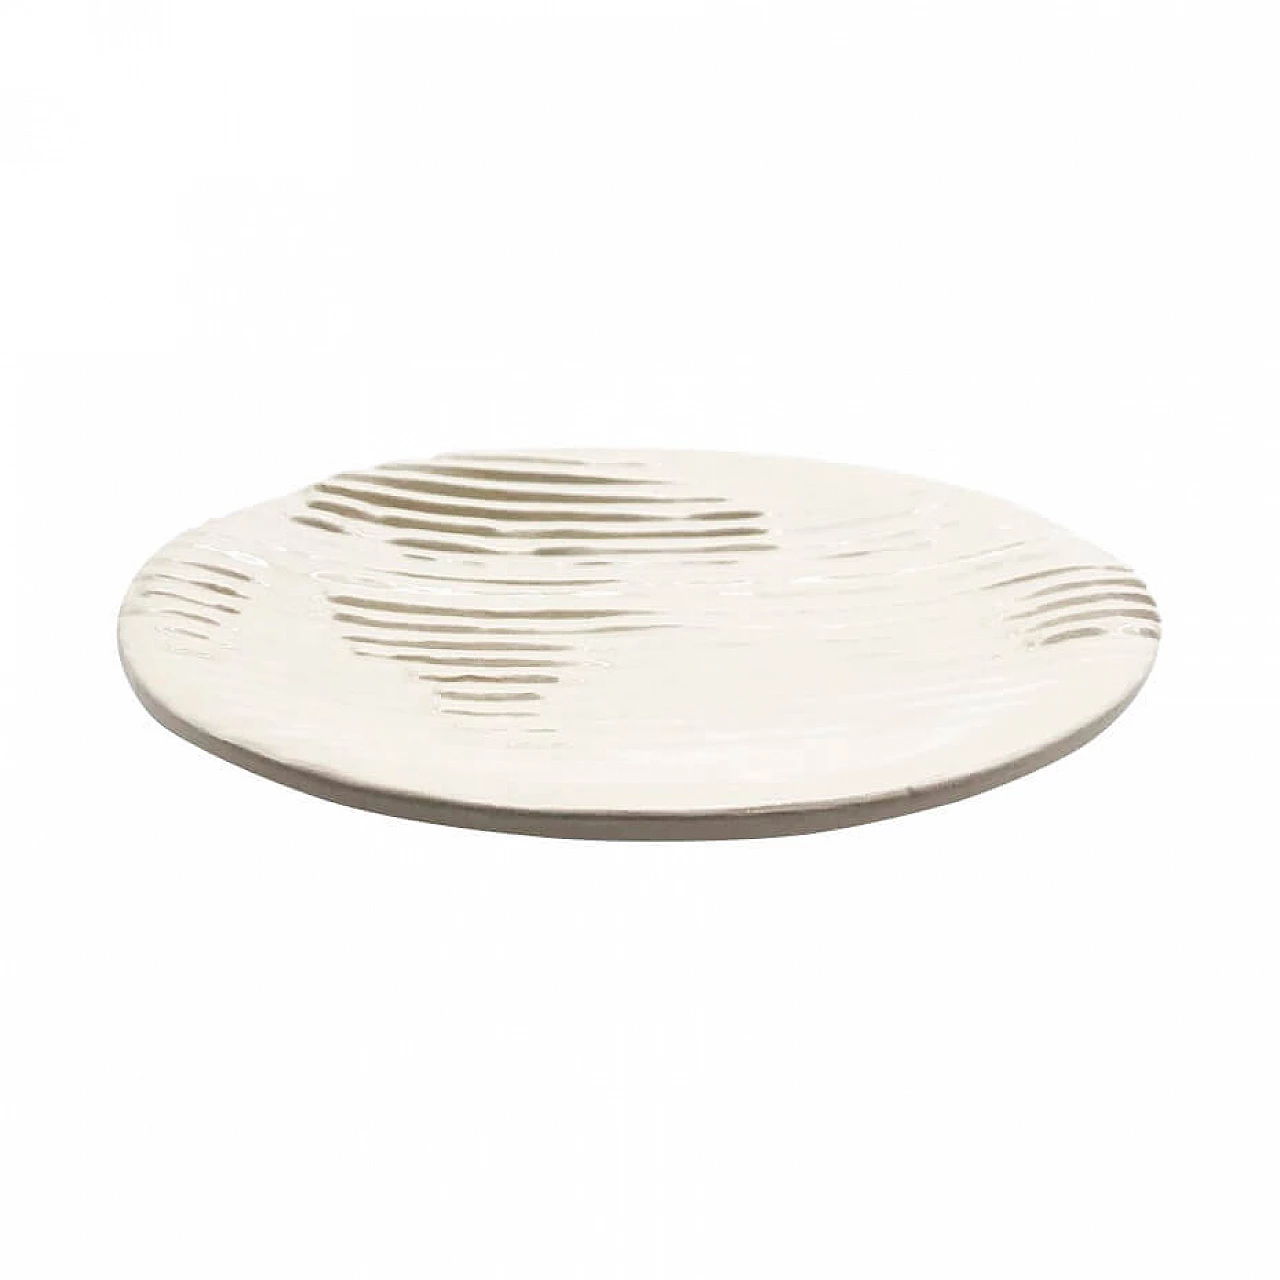 Small plate in white glazed ceramic, production OVO 1082056